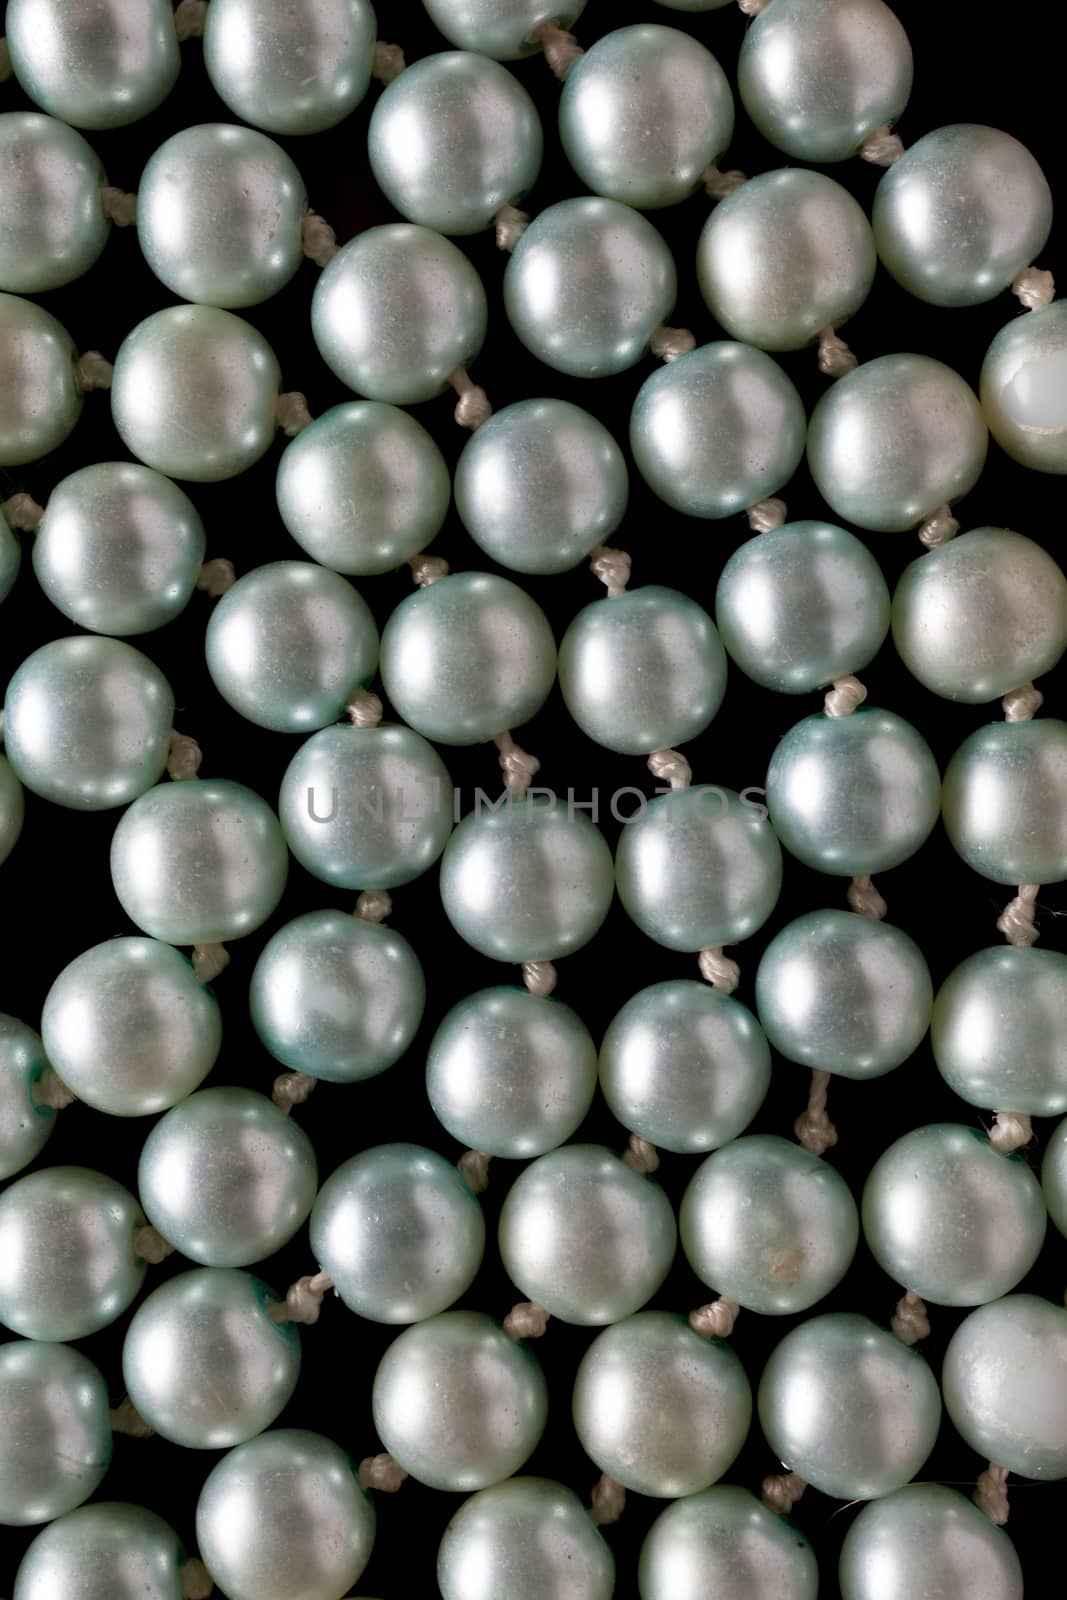 Pearls on black background